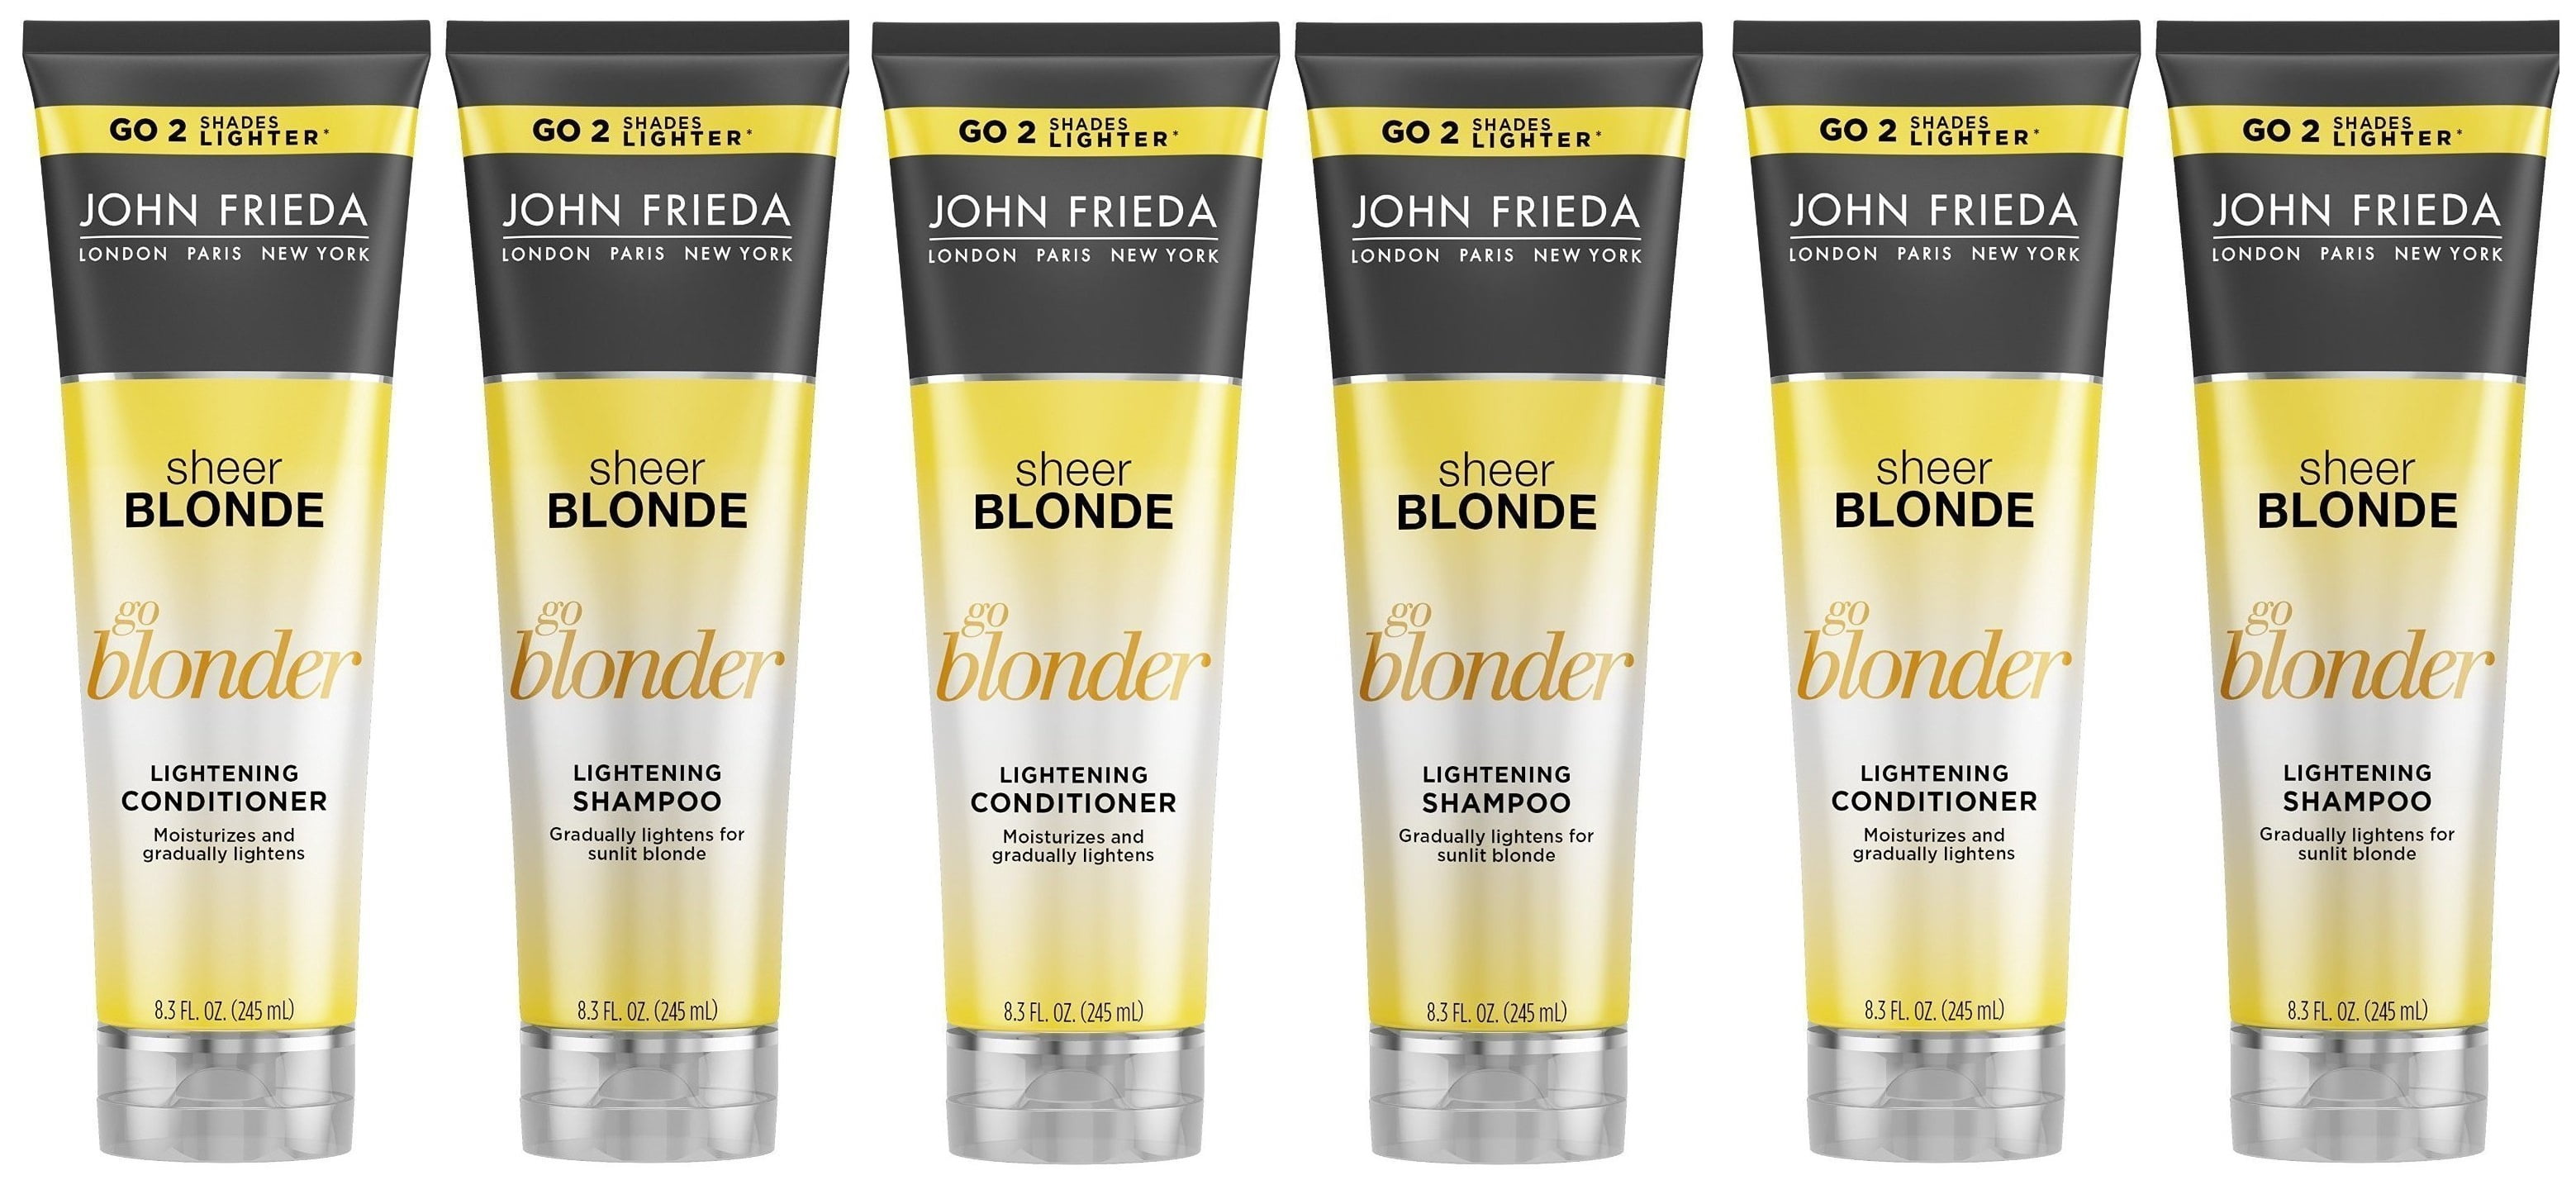 1. John Frieda Sheer Blonde Go Blonder Lightening Shampoo - wide 8